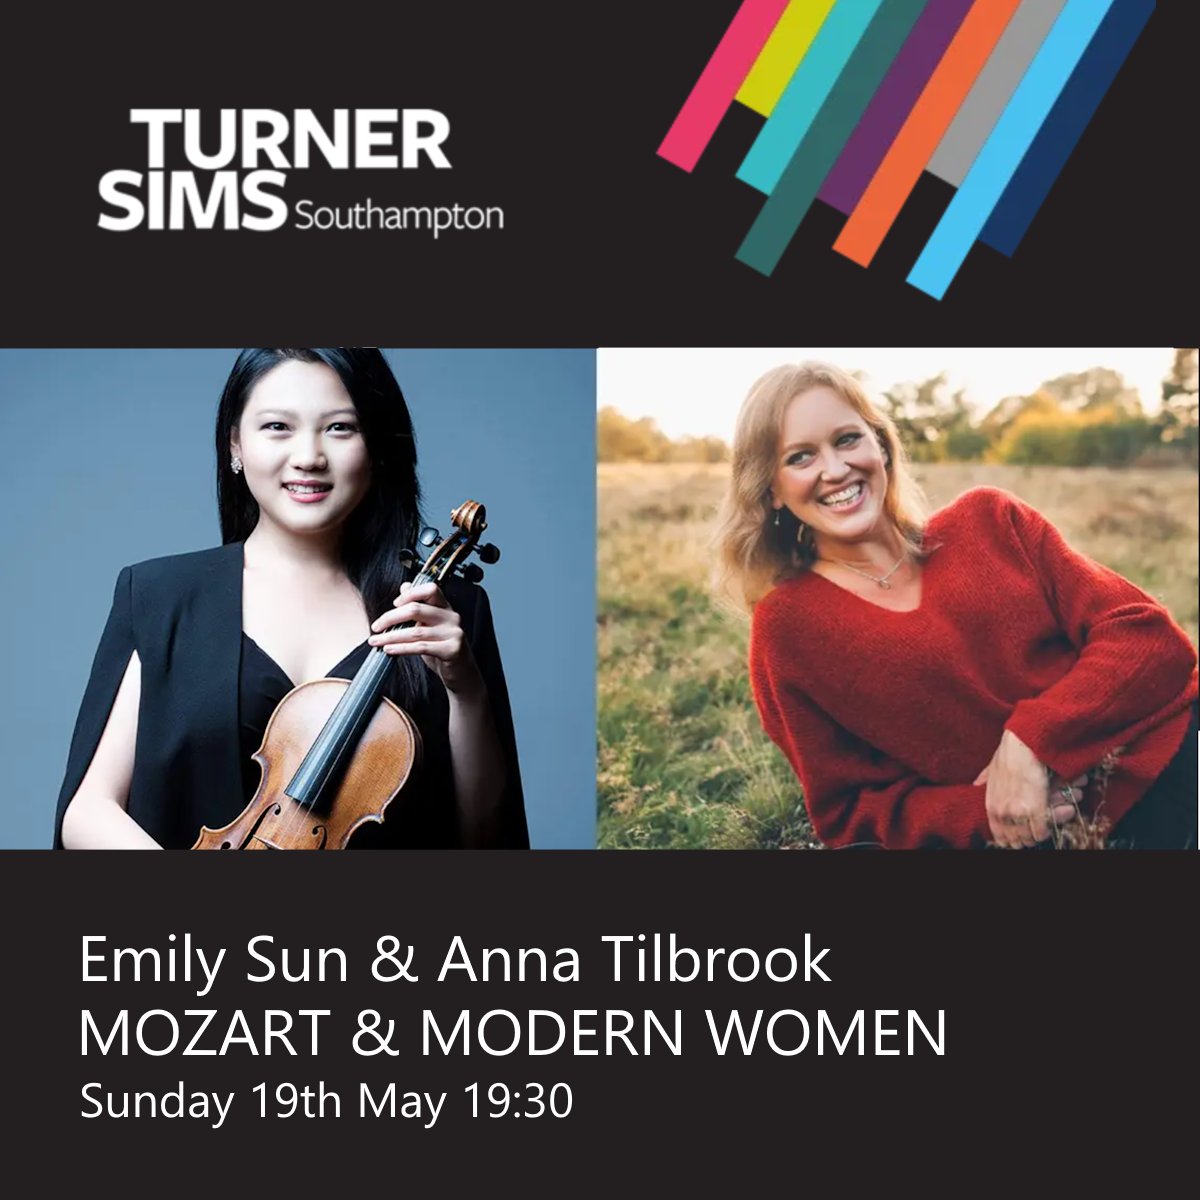 19th May @emilysunviolin & @AnnaTilbrook at @TurnerSims Southampton - Mozart & Modern Women... turnersims.co.uk/events/emily-s…